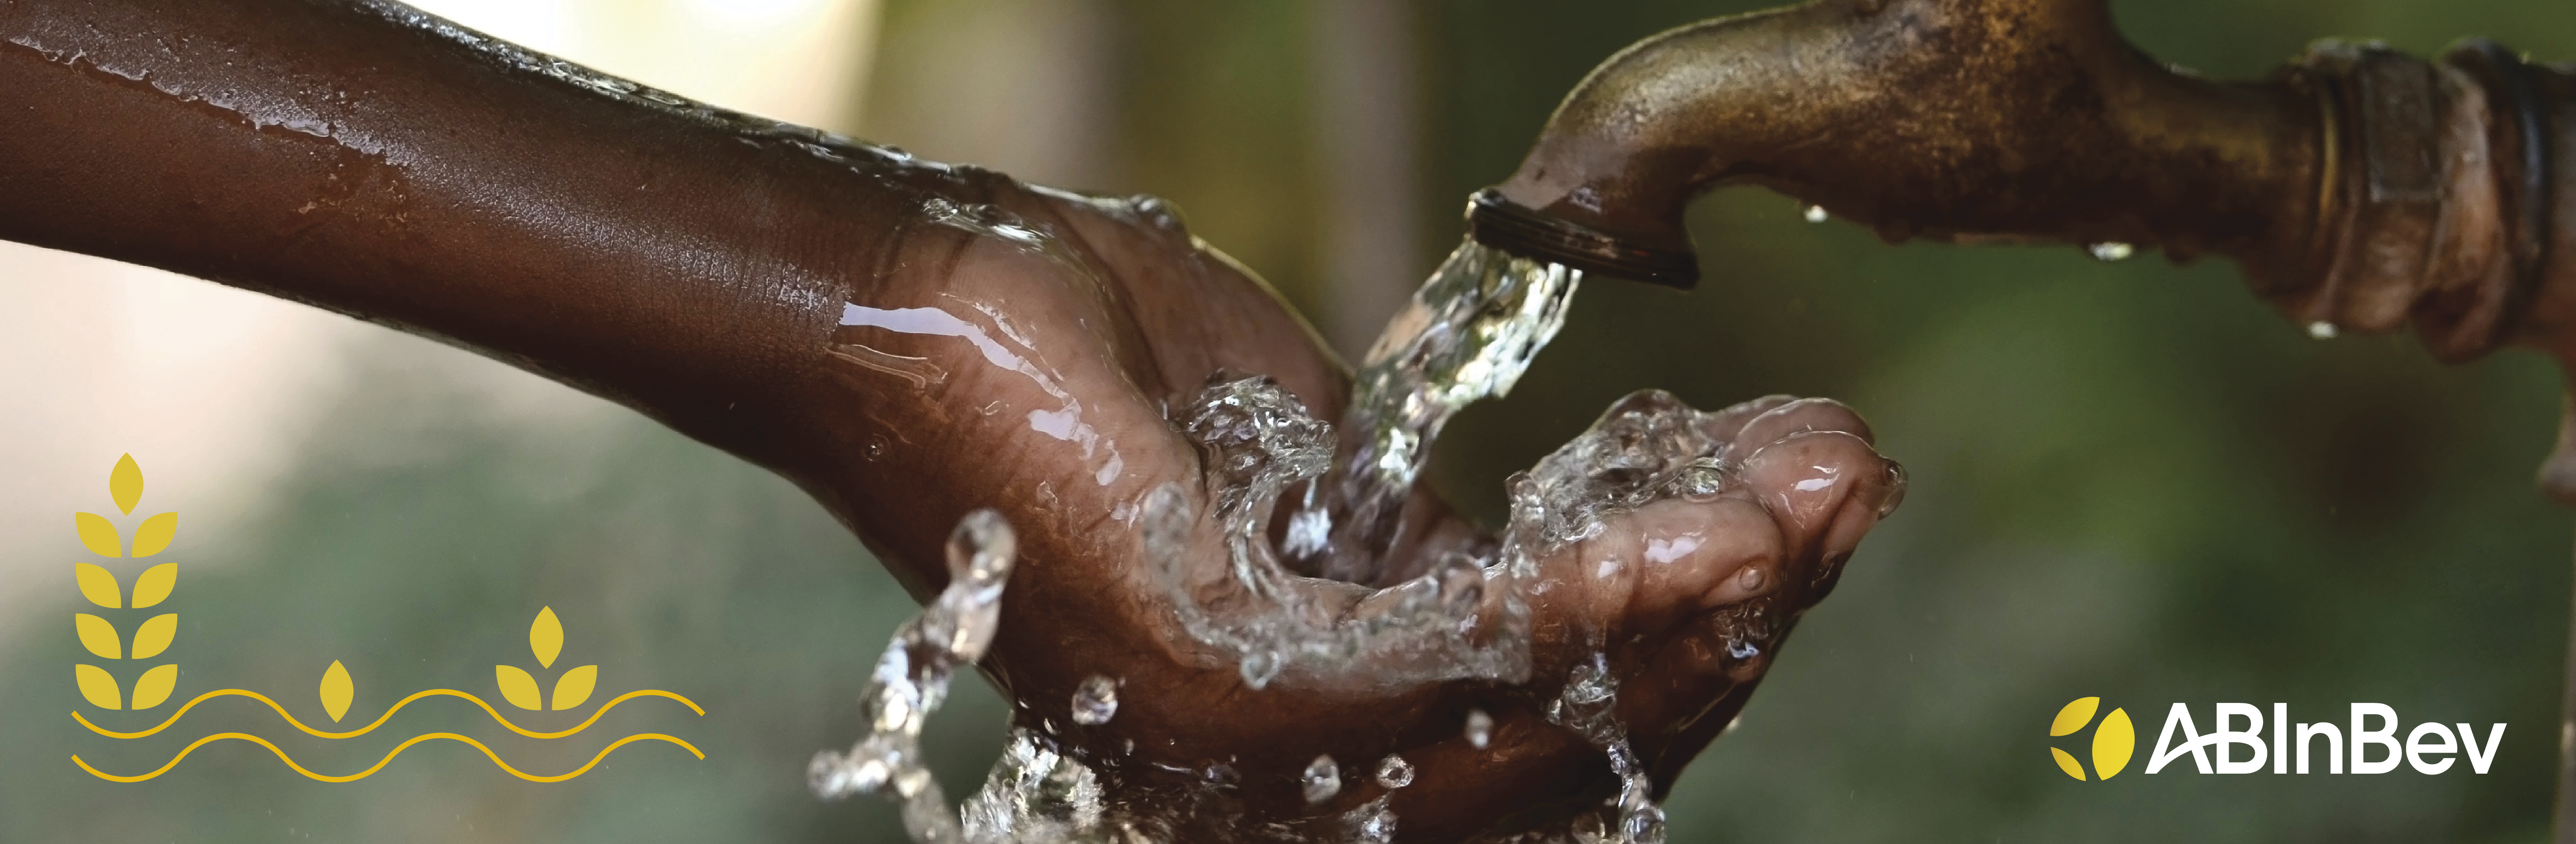 5 ways AB InBev is helping address global water challenges